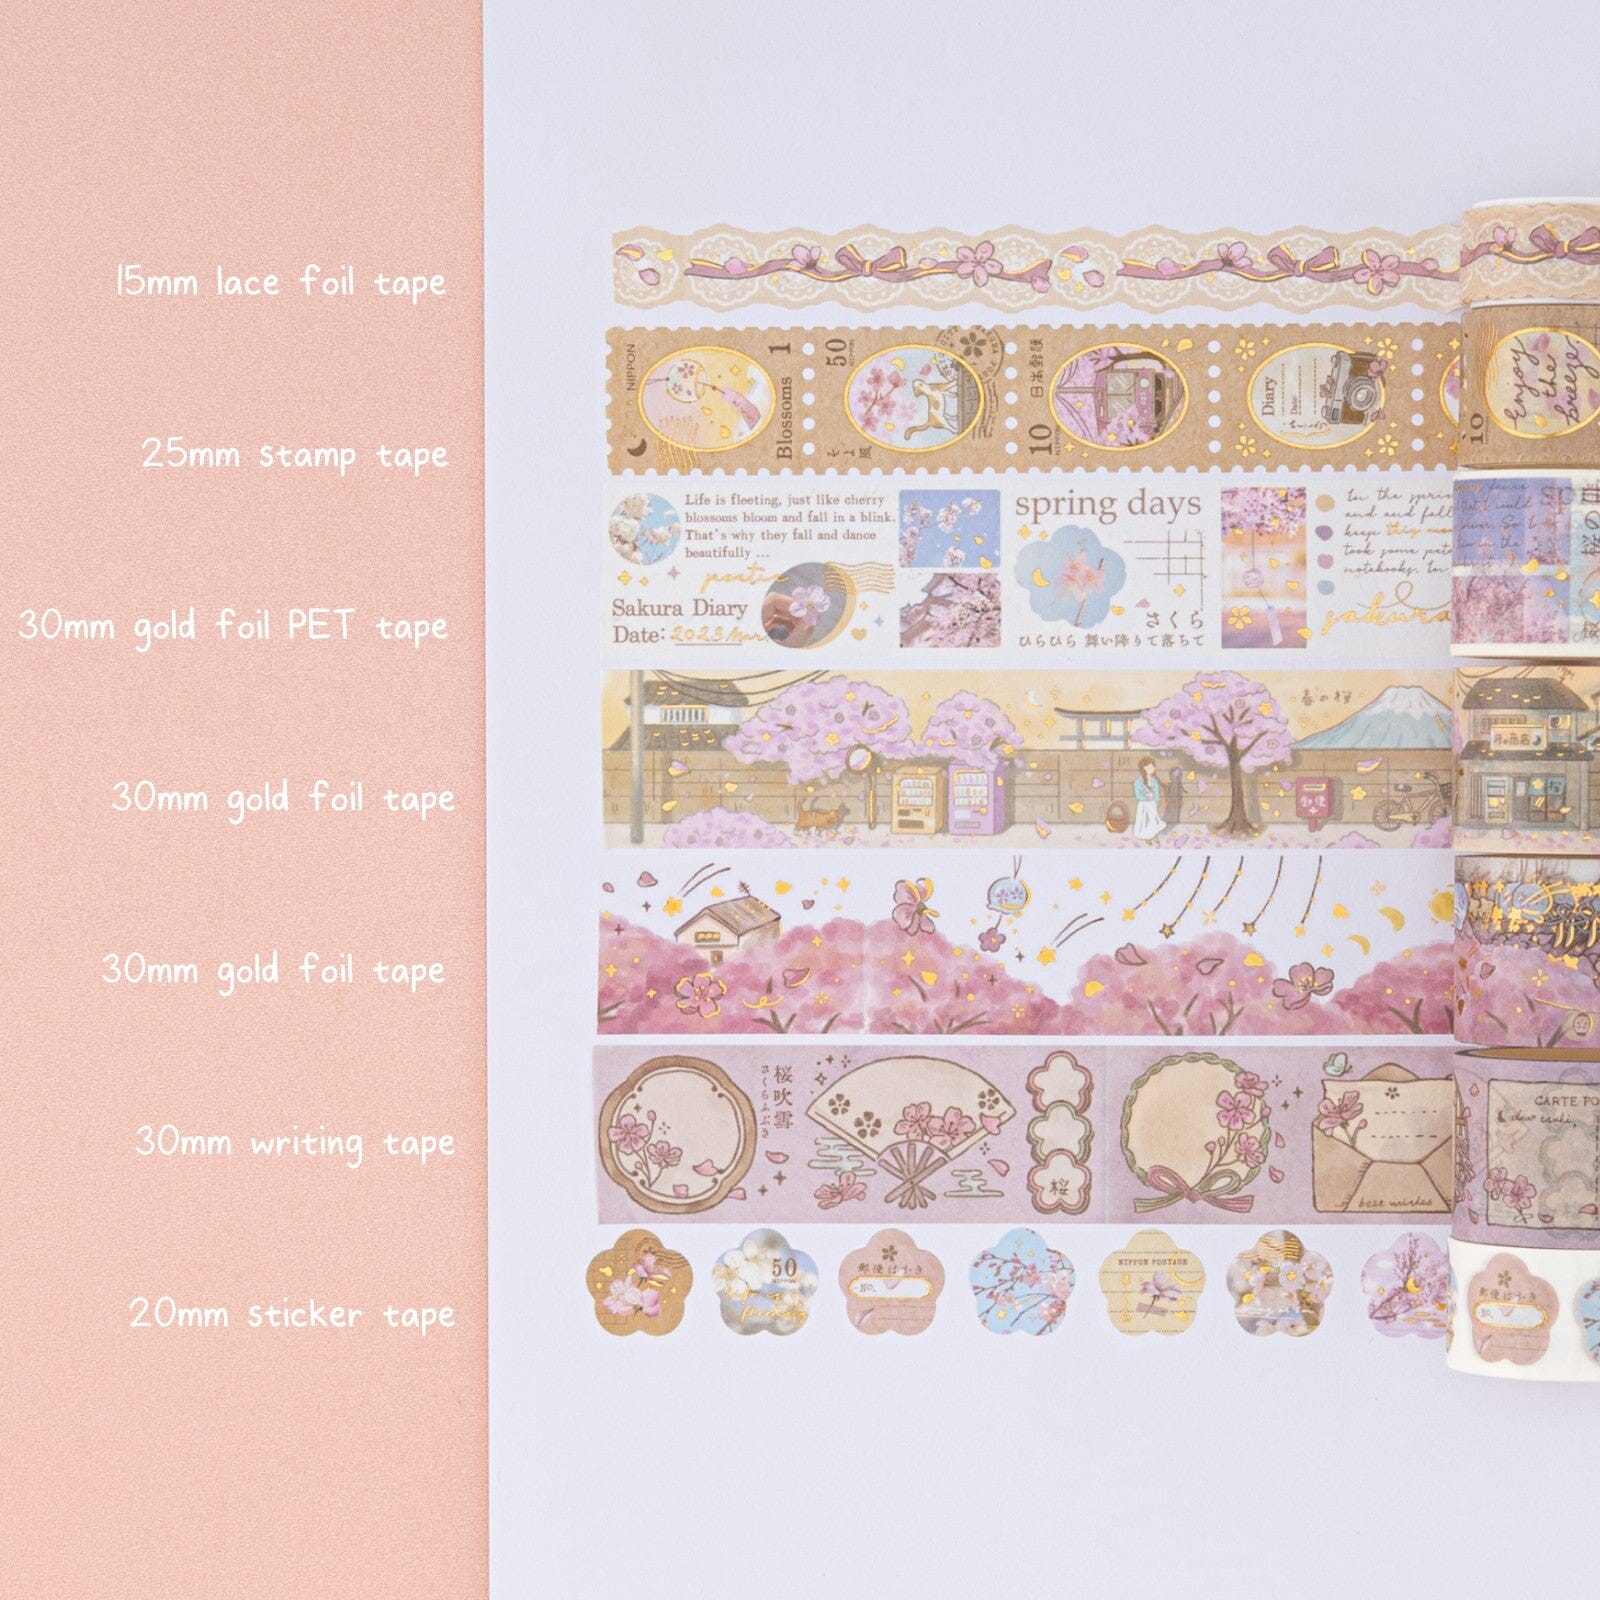 Sakura Breeze washi tape set swatch including 15mm lace foil tape, 25mm stamp tape, 30mm gold foil PET tape, 2x 30mm gold foil tape, 30mm writing tape, 20mm sticker tape